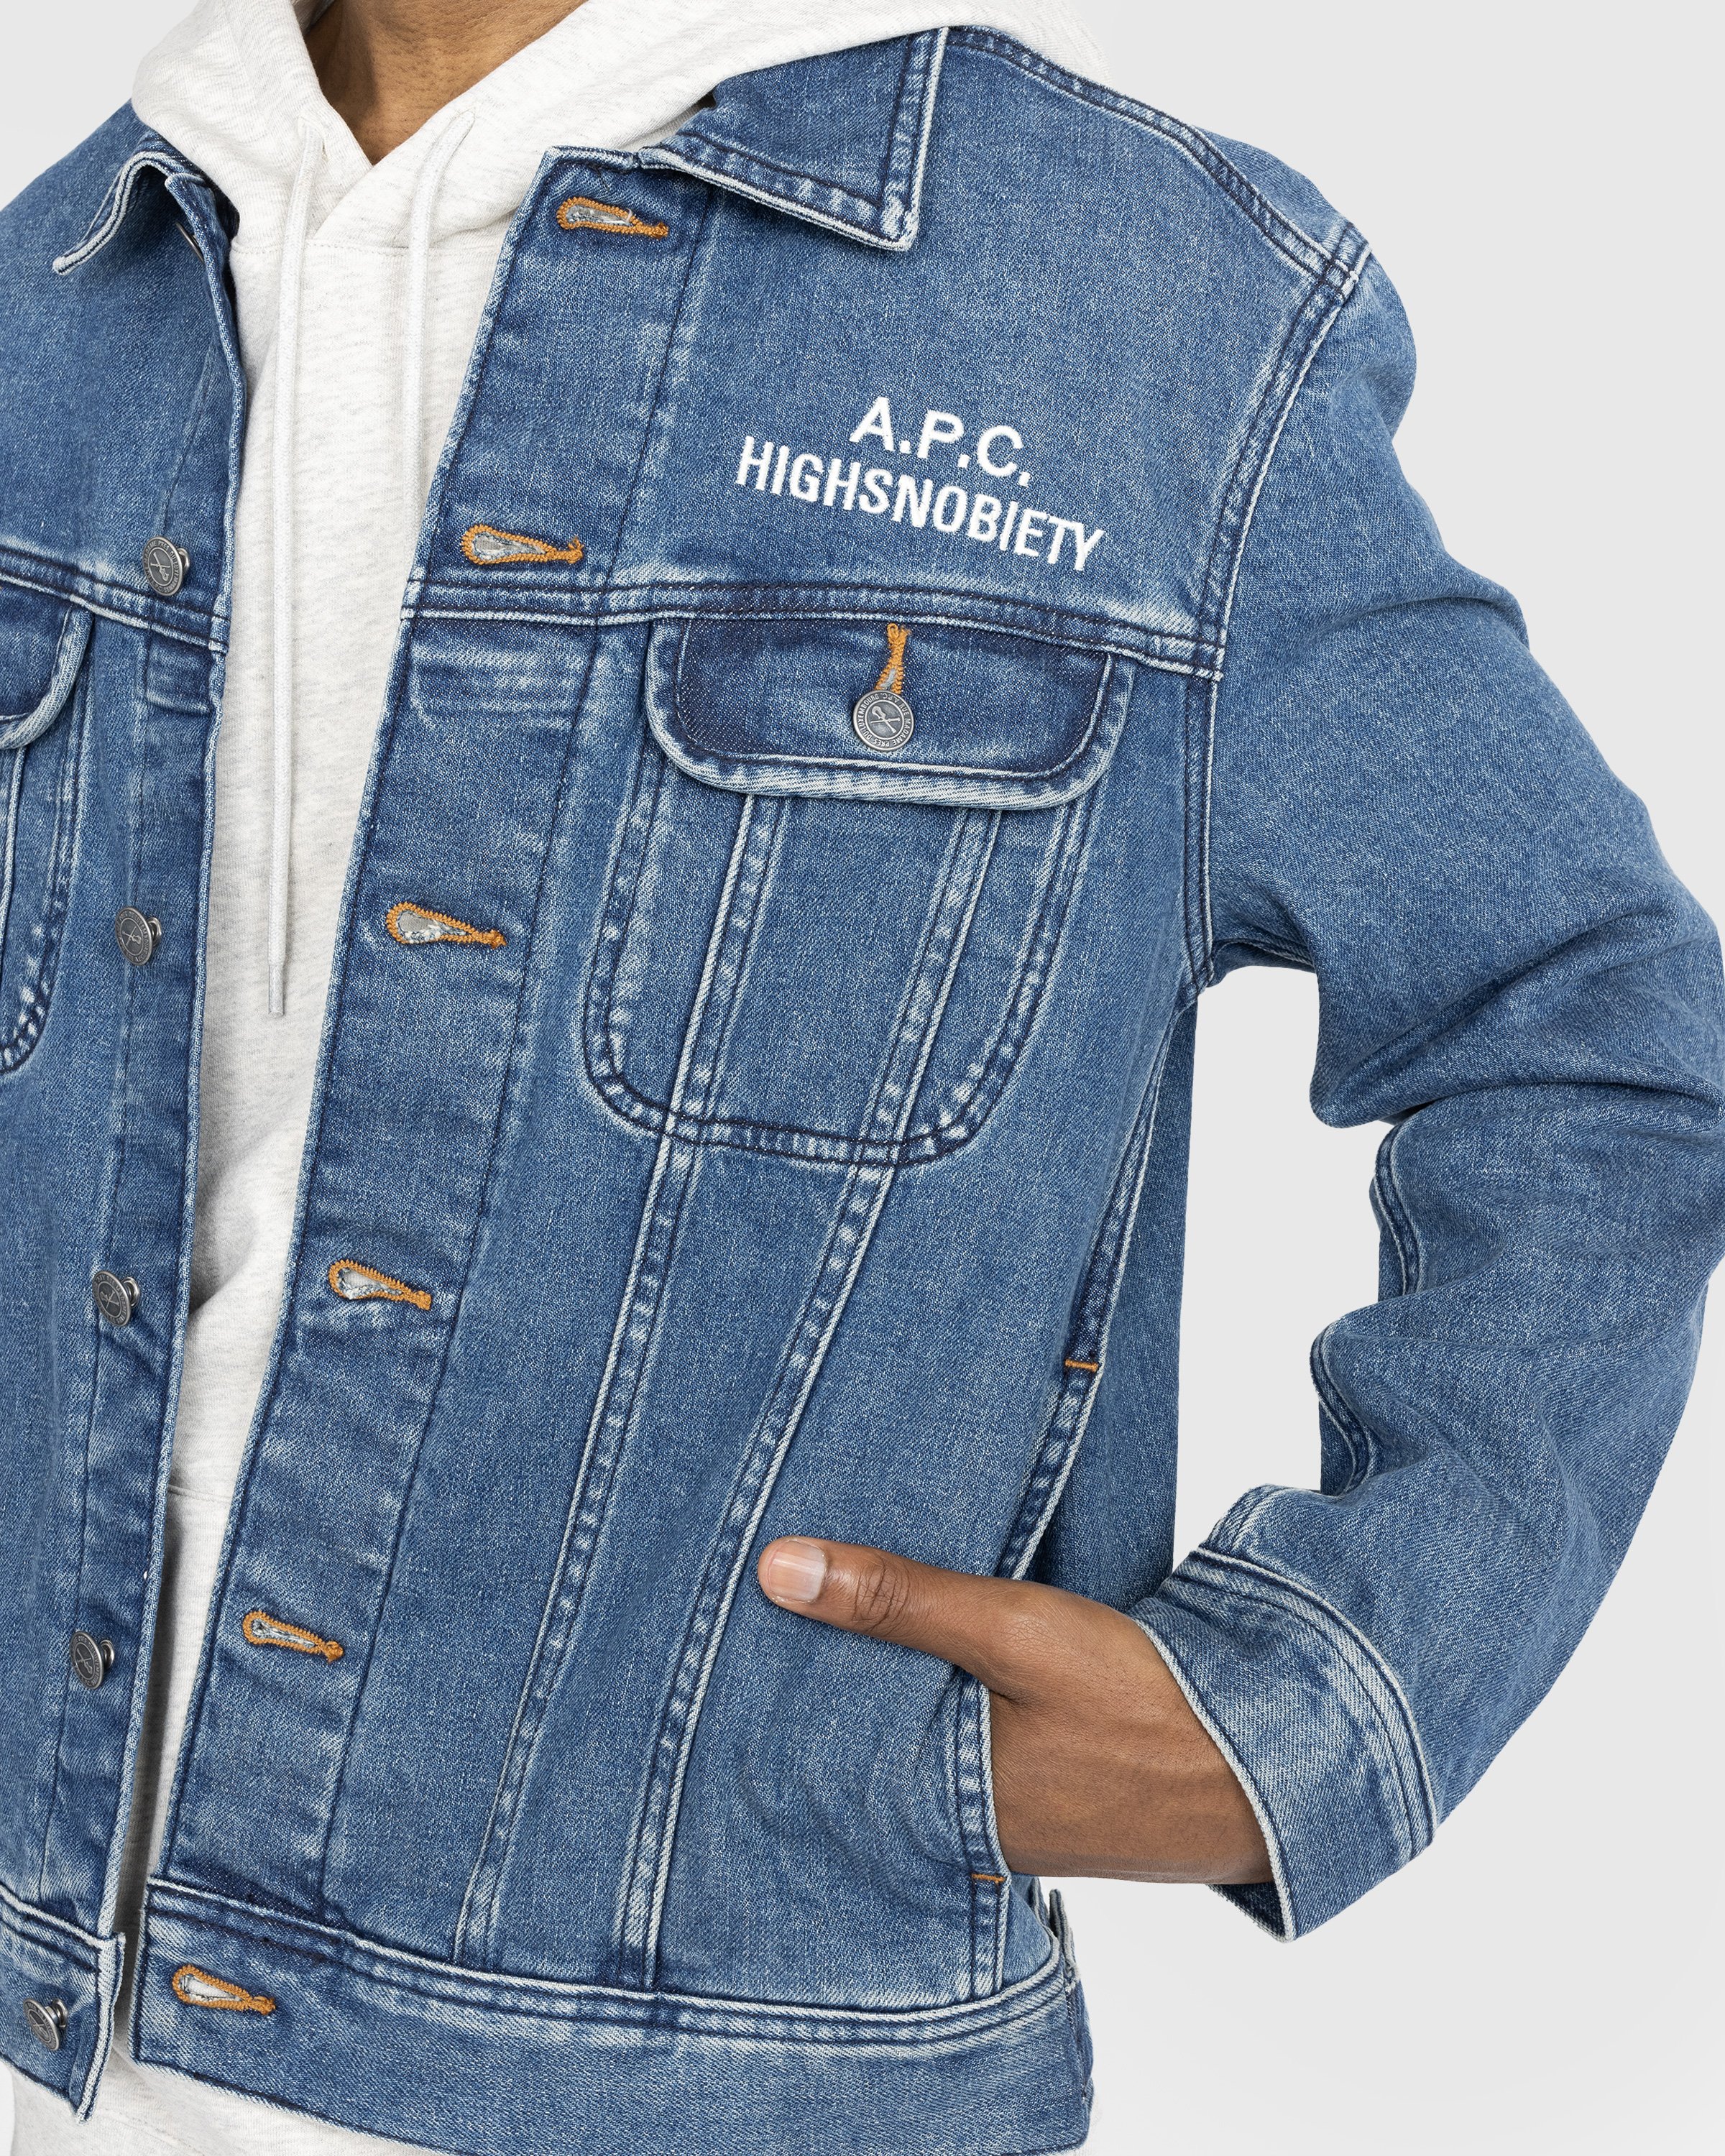 A.P.C. x Highsnobiety - Neu York Jean Jacket - Clothing - Blue - Image 5